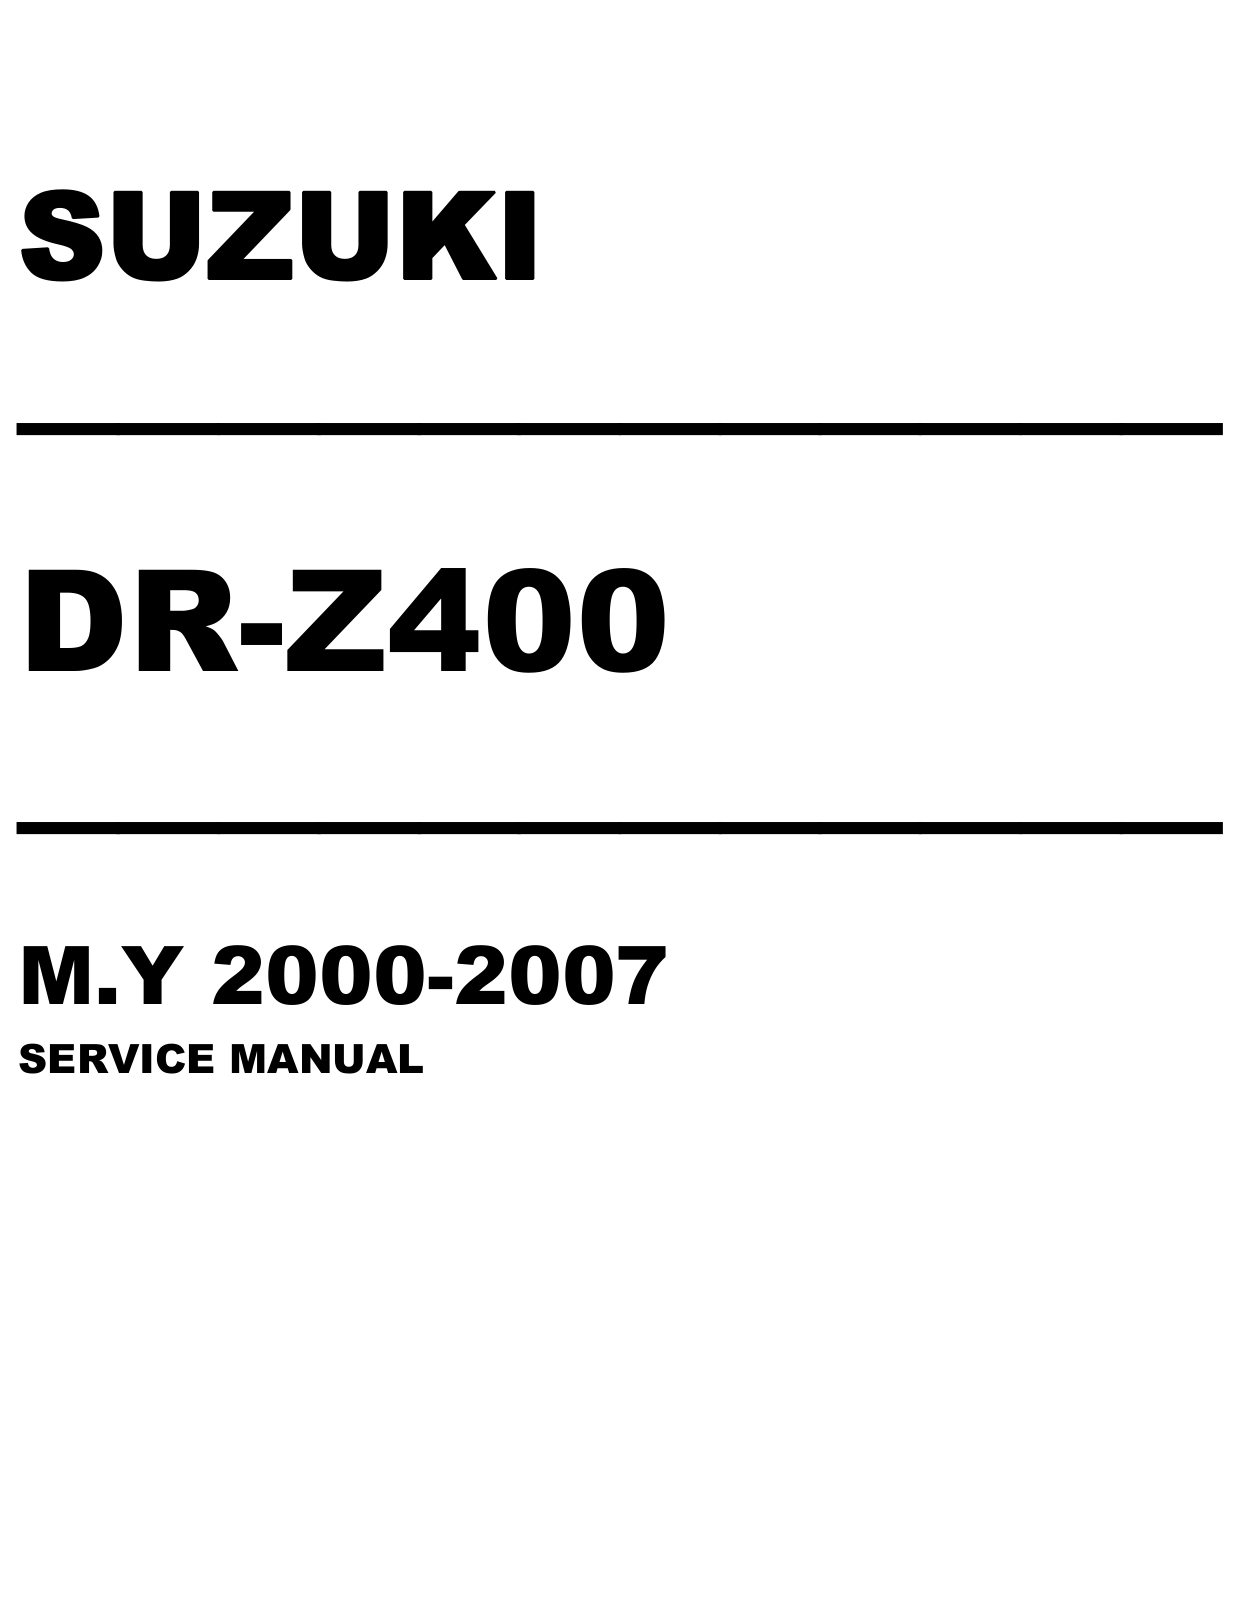 Suzuki DRZ400 Service Manual